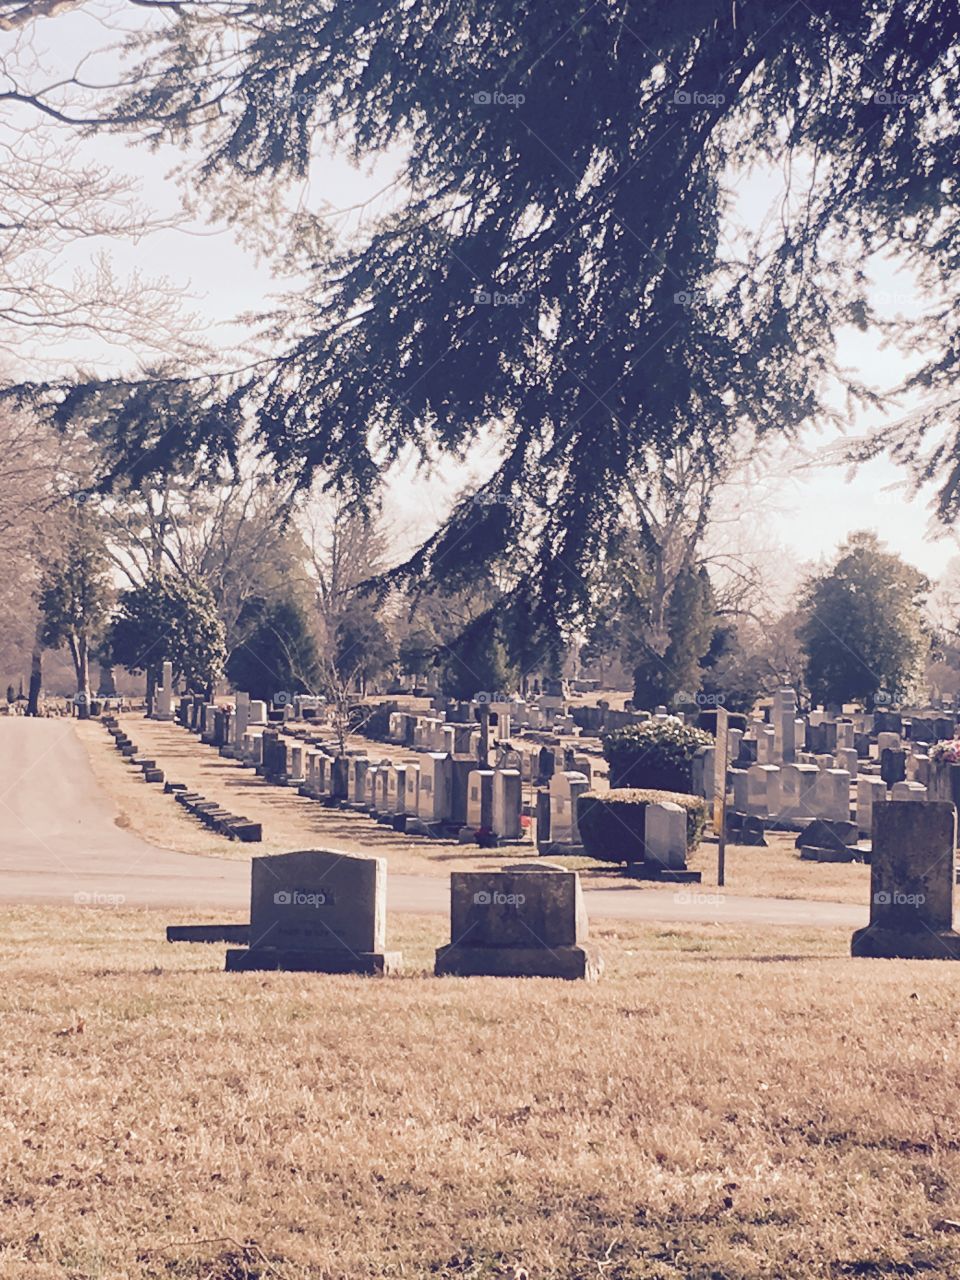 Down the gravesite